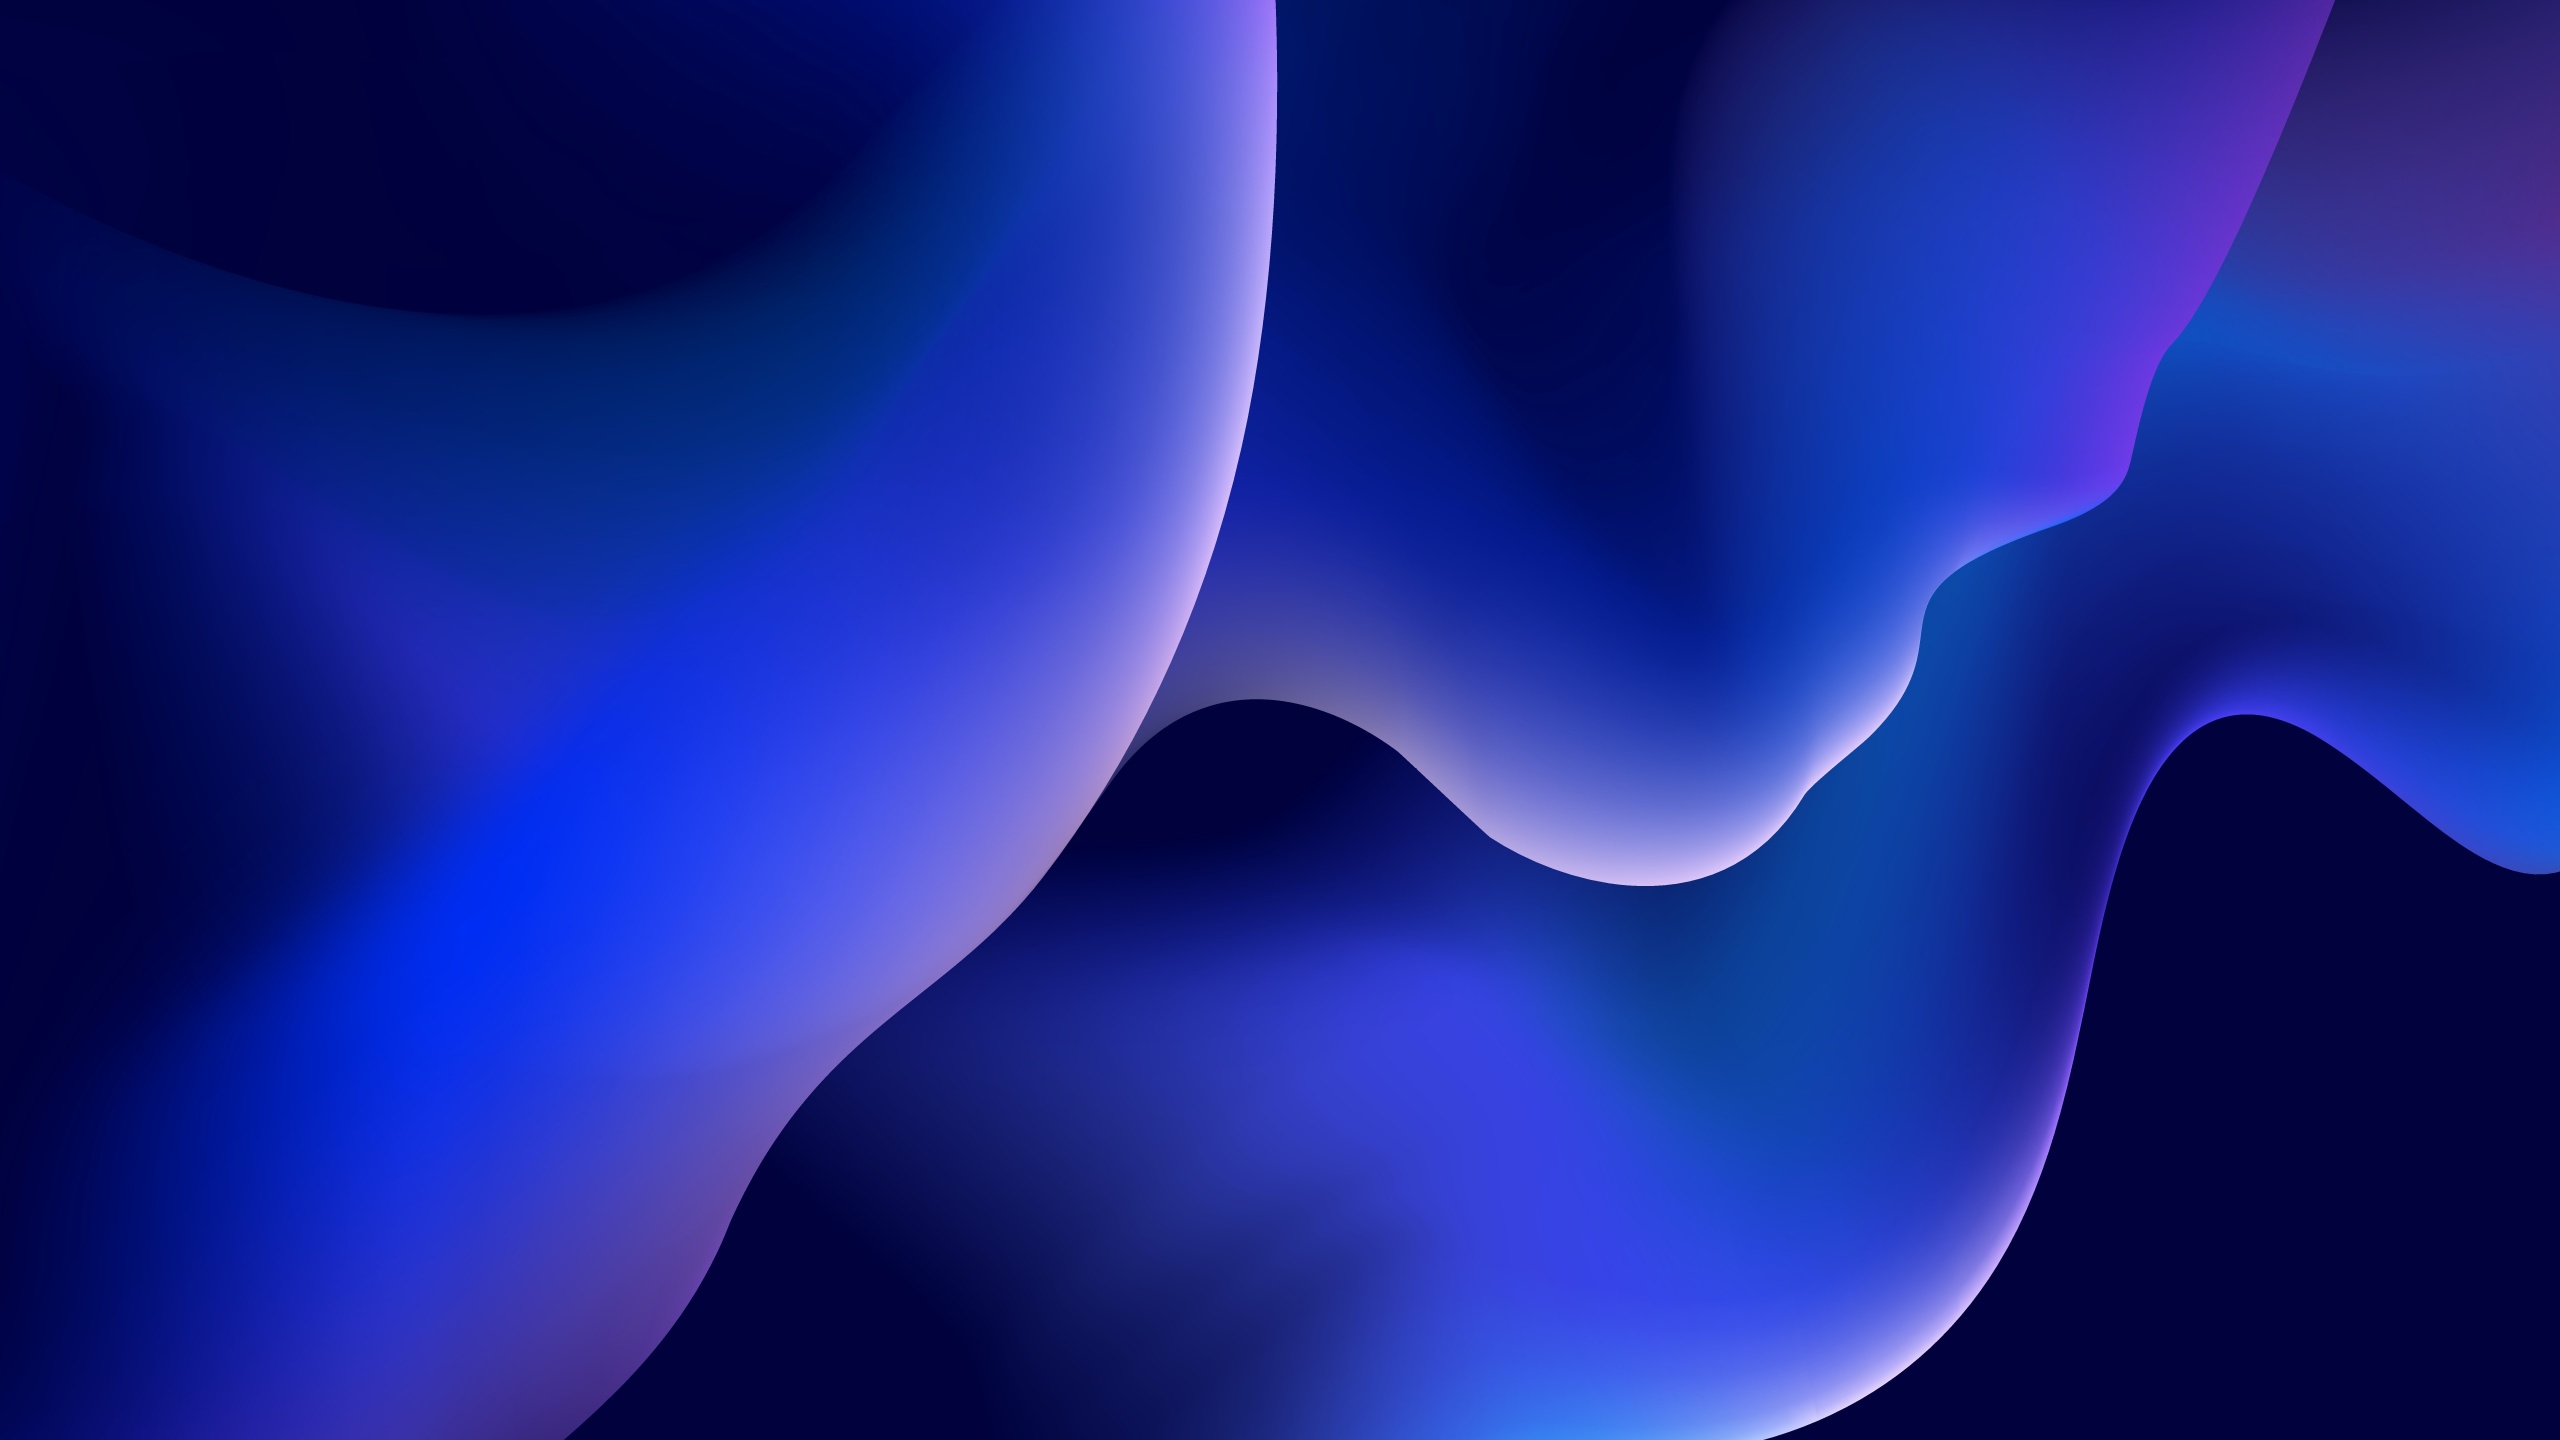 iOS Wallpaper 4K, Blue background, Texture, Curves